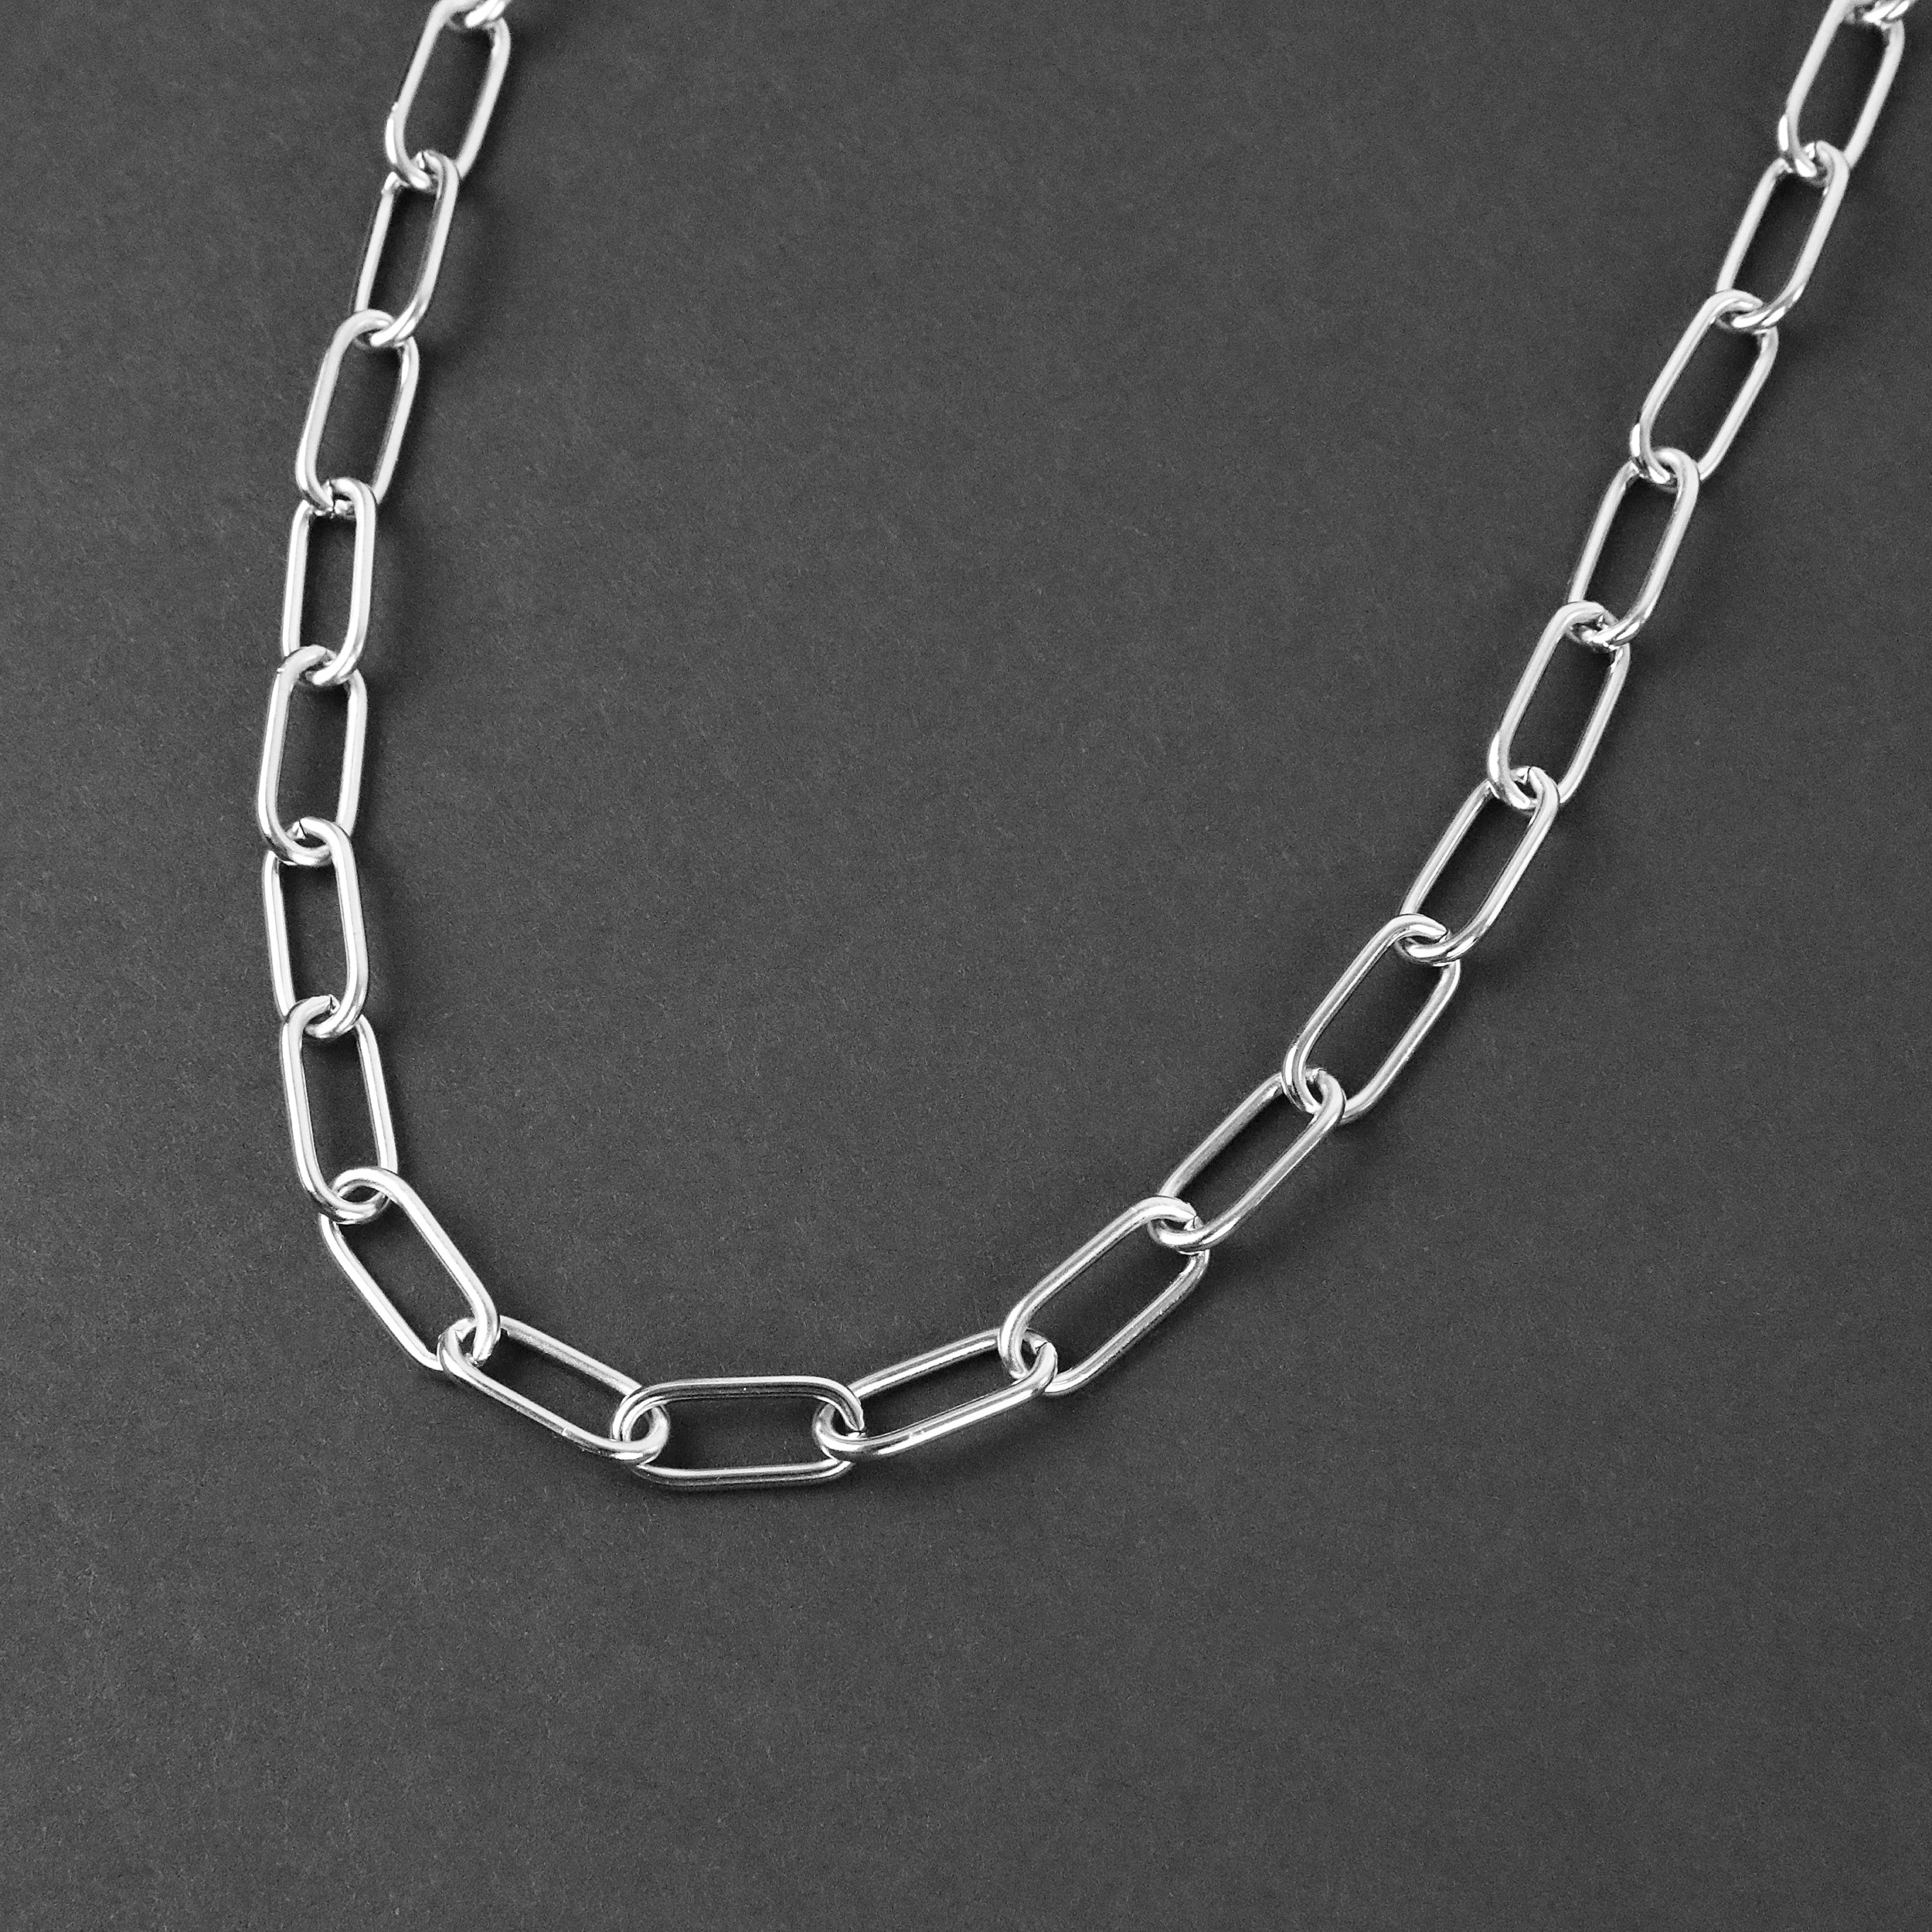 Clip Cable Chain - Silver 7mm